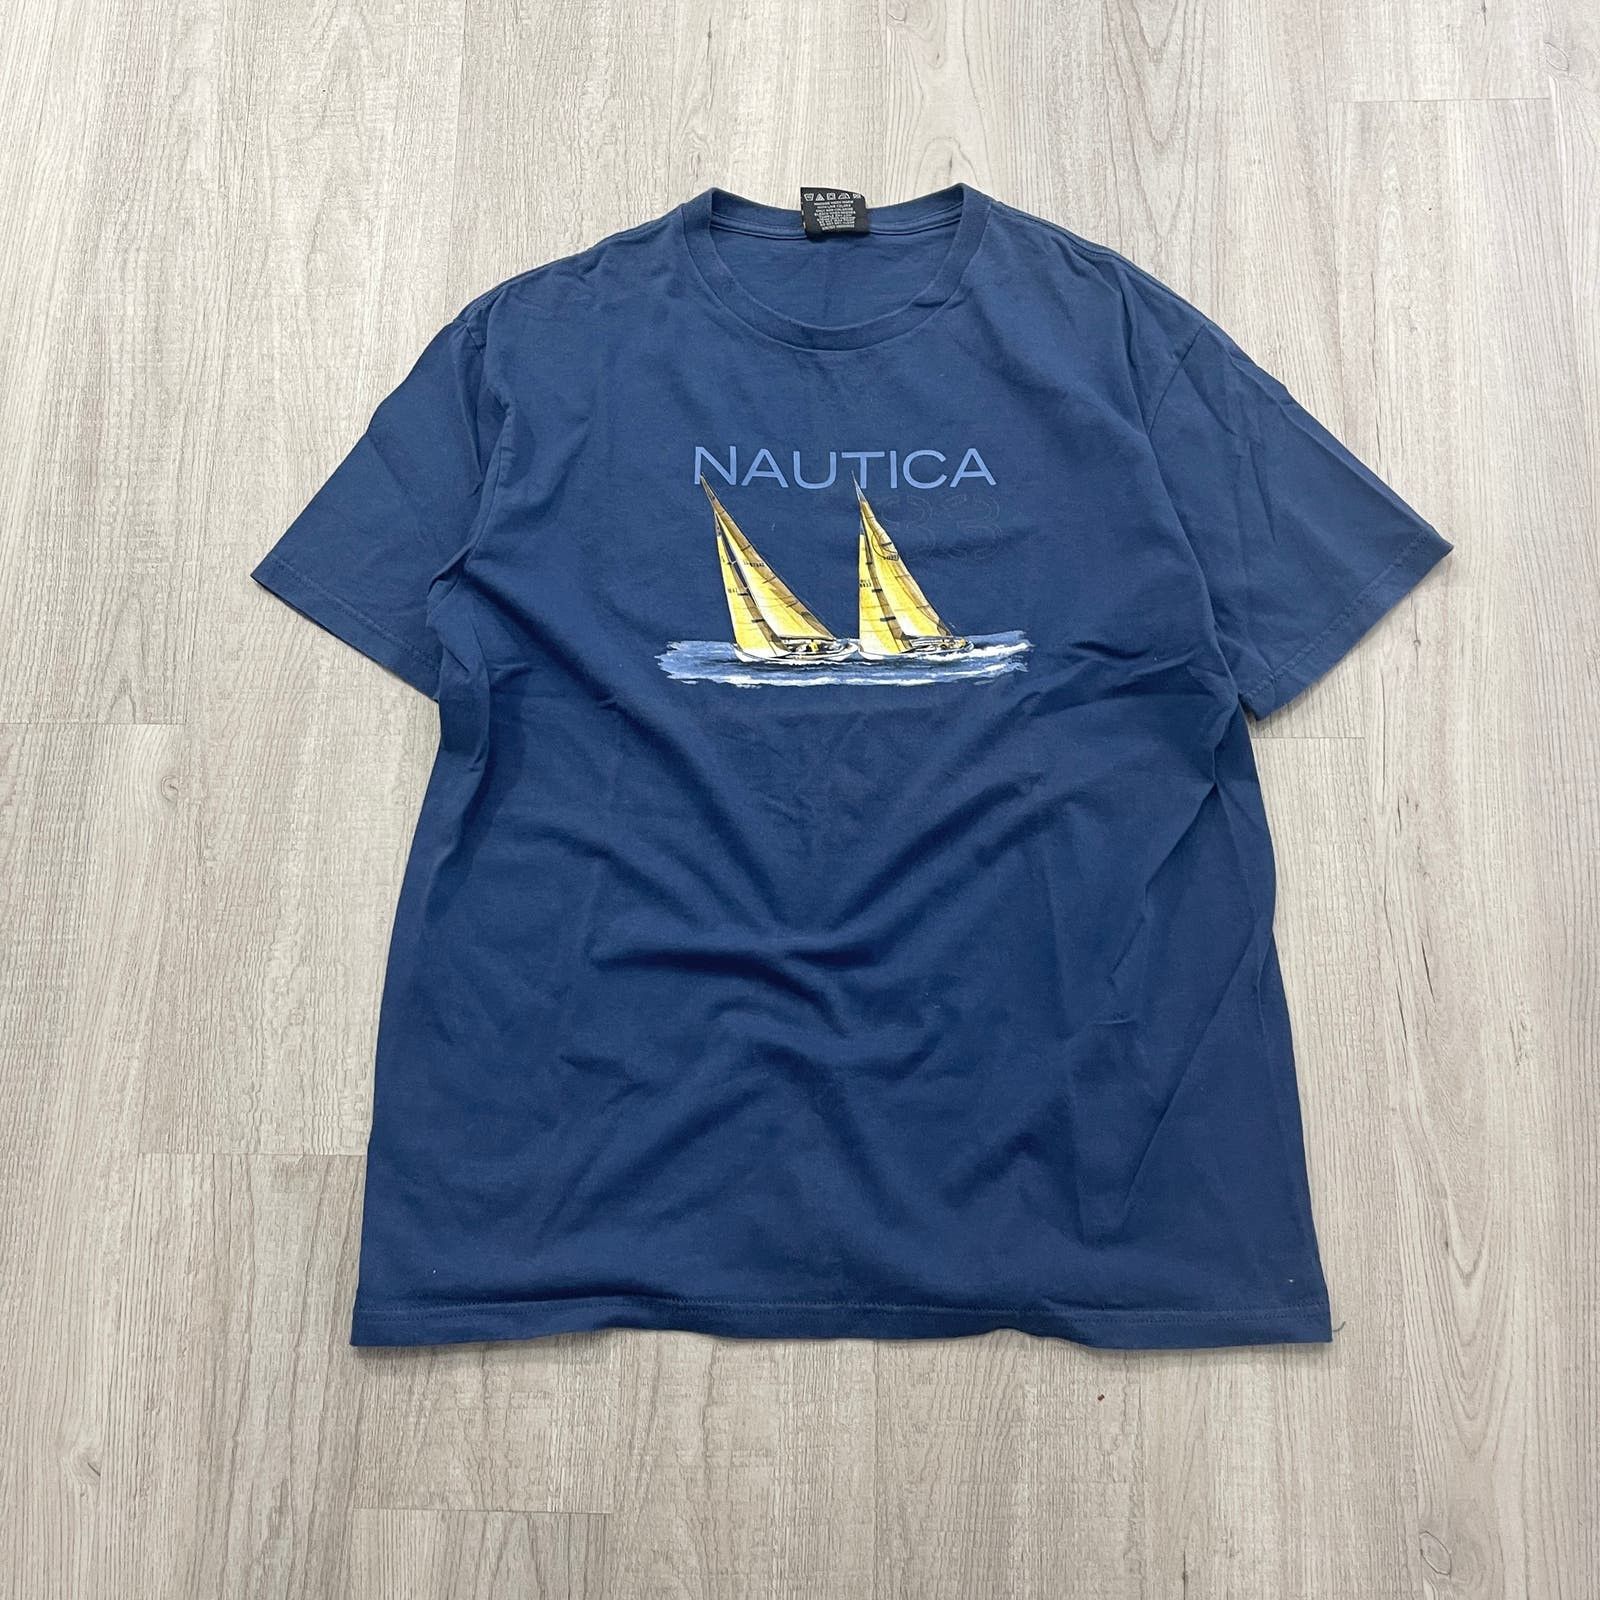 Nautica VINTAGE 90s Nautica Competition Sailing Boat Shirt Large Size US XL / EU 56 / 4 - 1 Preview